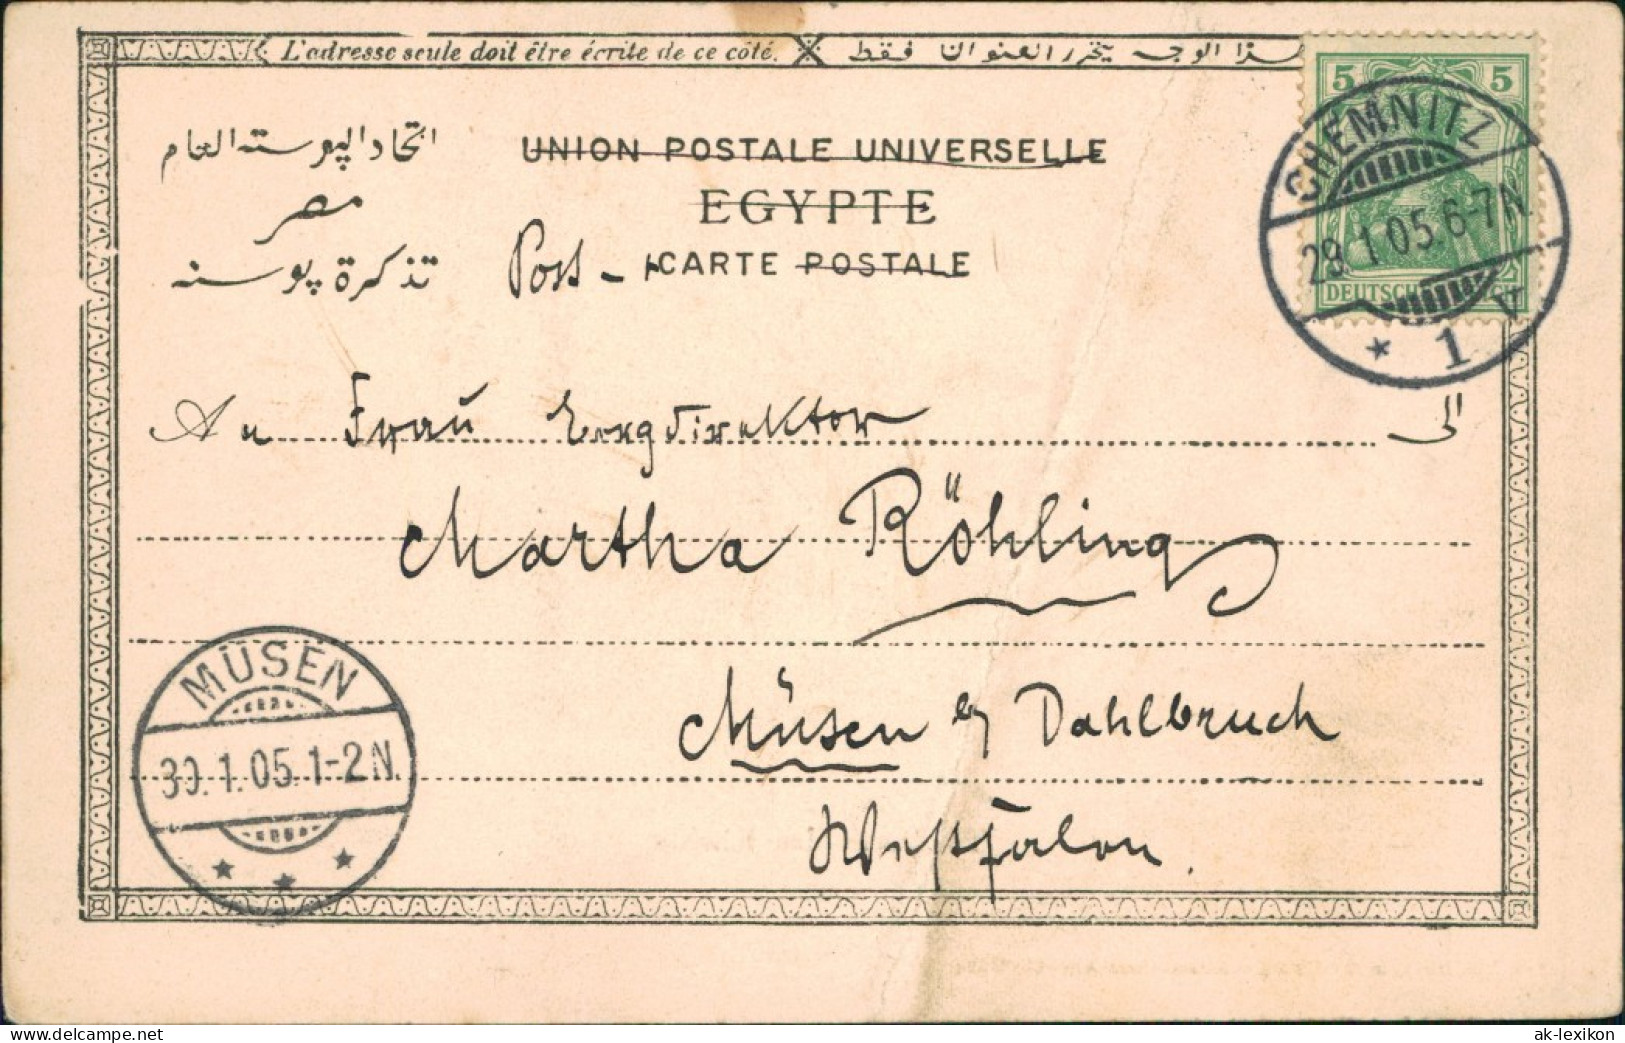 Kairo القاهرة Tombeaux Des Khalifs 1905 - El Cairo